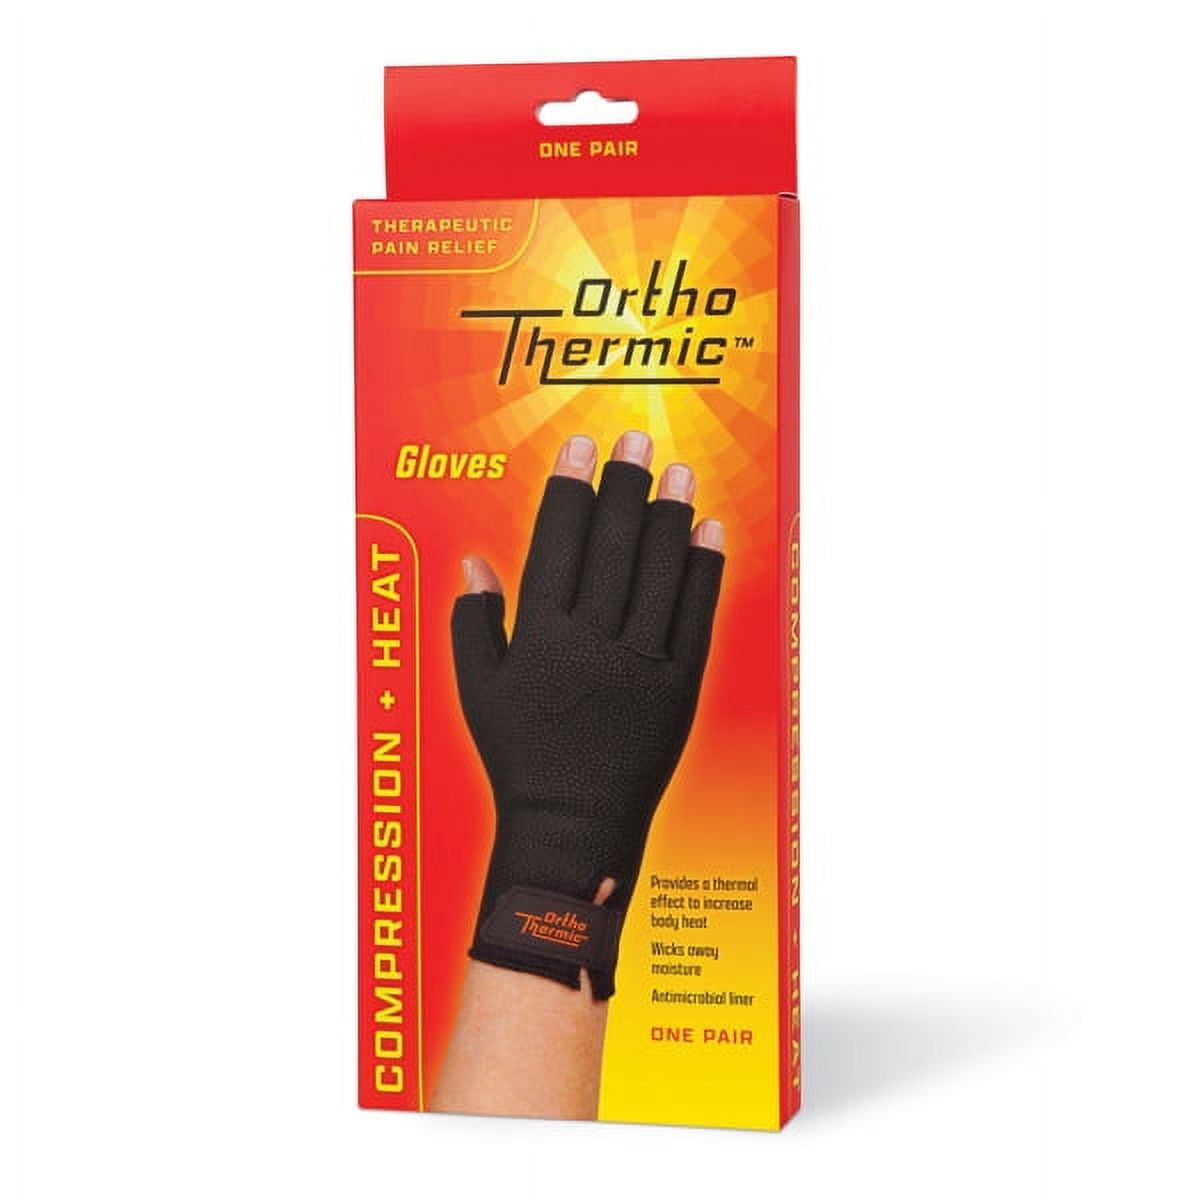  Benherofun Heat Resistant Gloves with Silicone Bumps